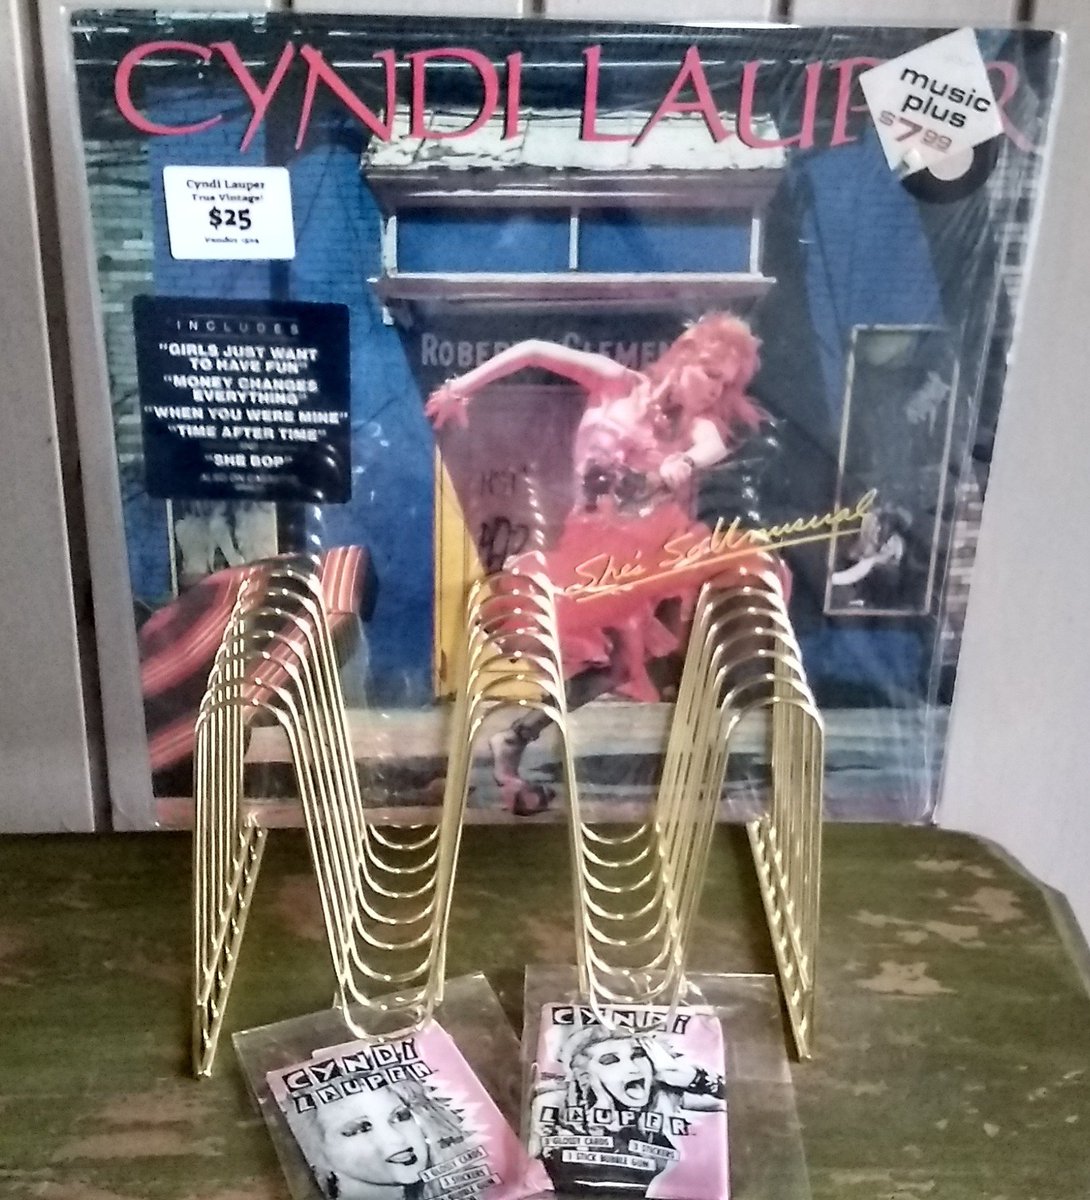 Vintage 1983 #CyndiLauper  She's so Unusual - vinyl record LP  #girlsjustwanttohavefun